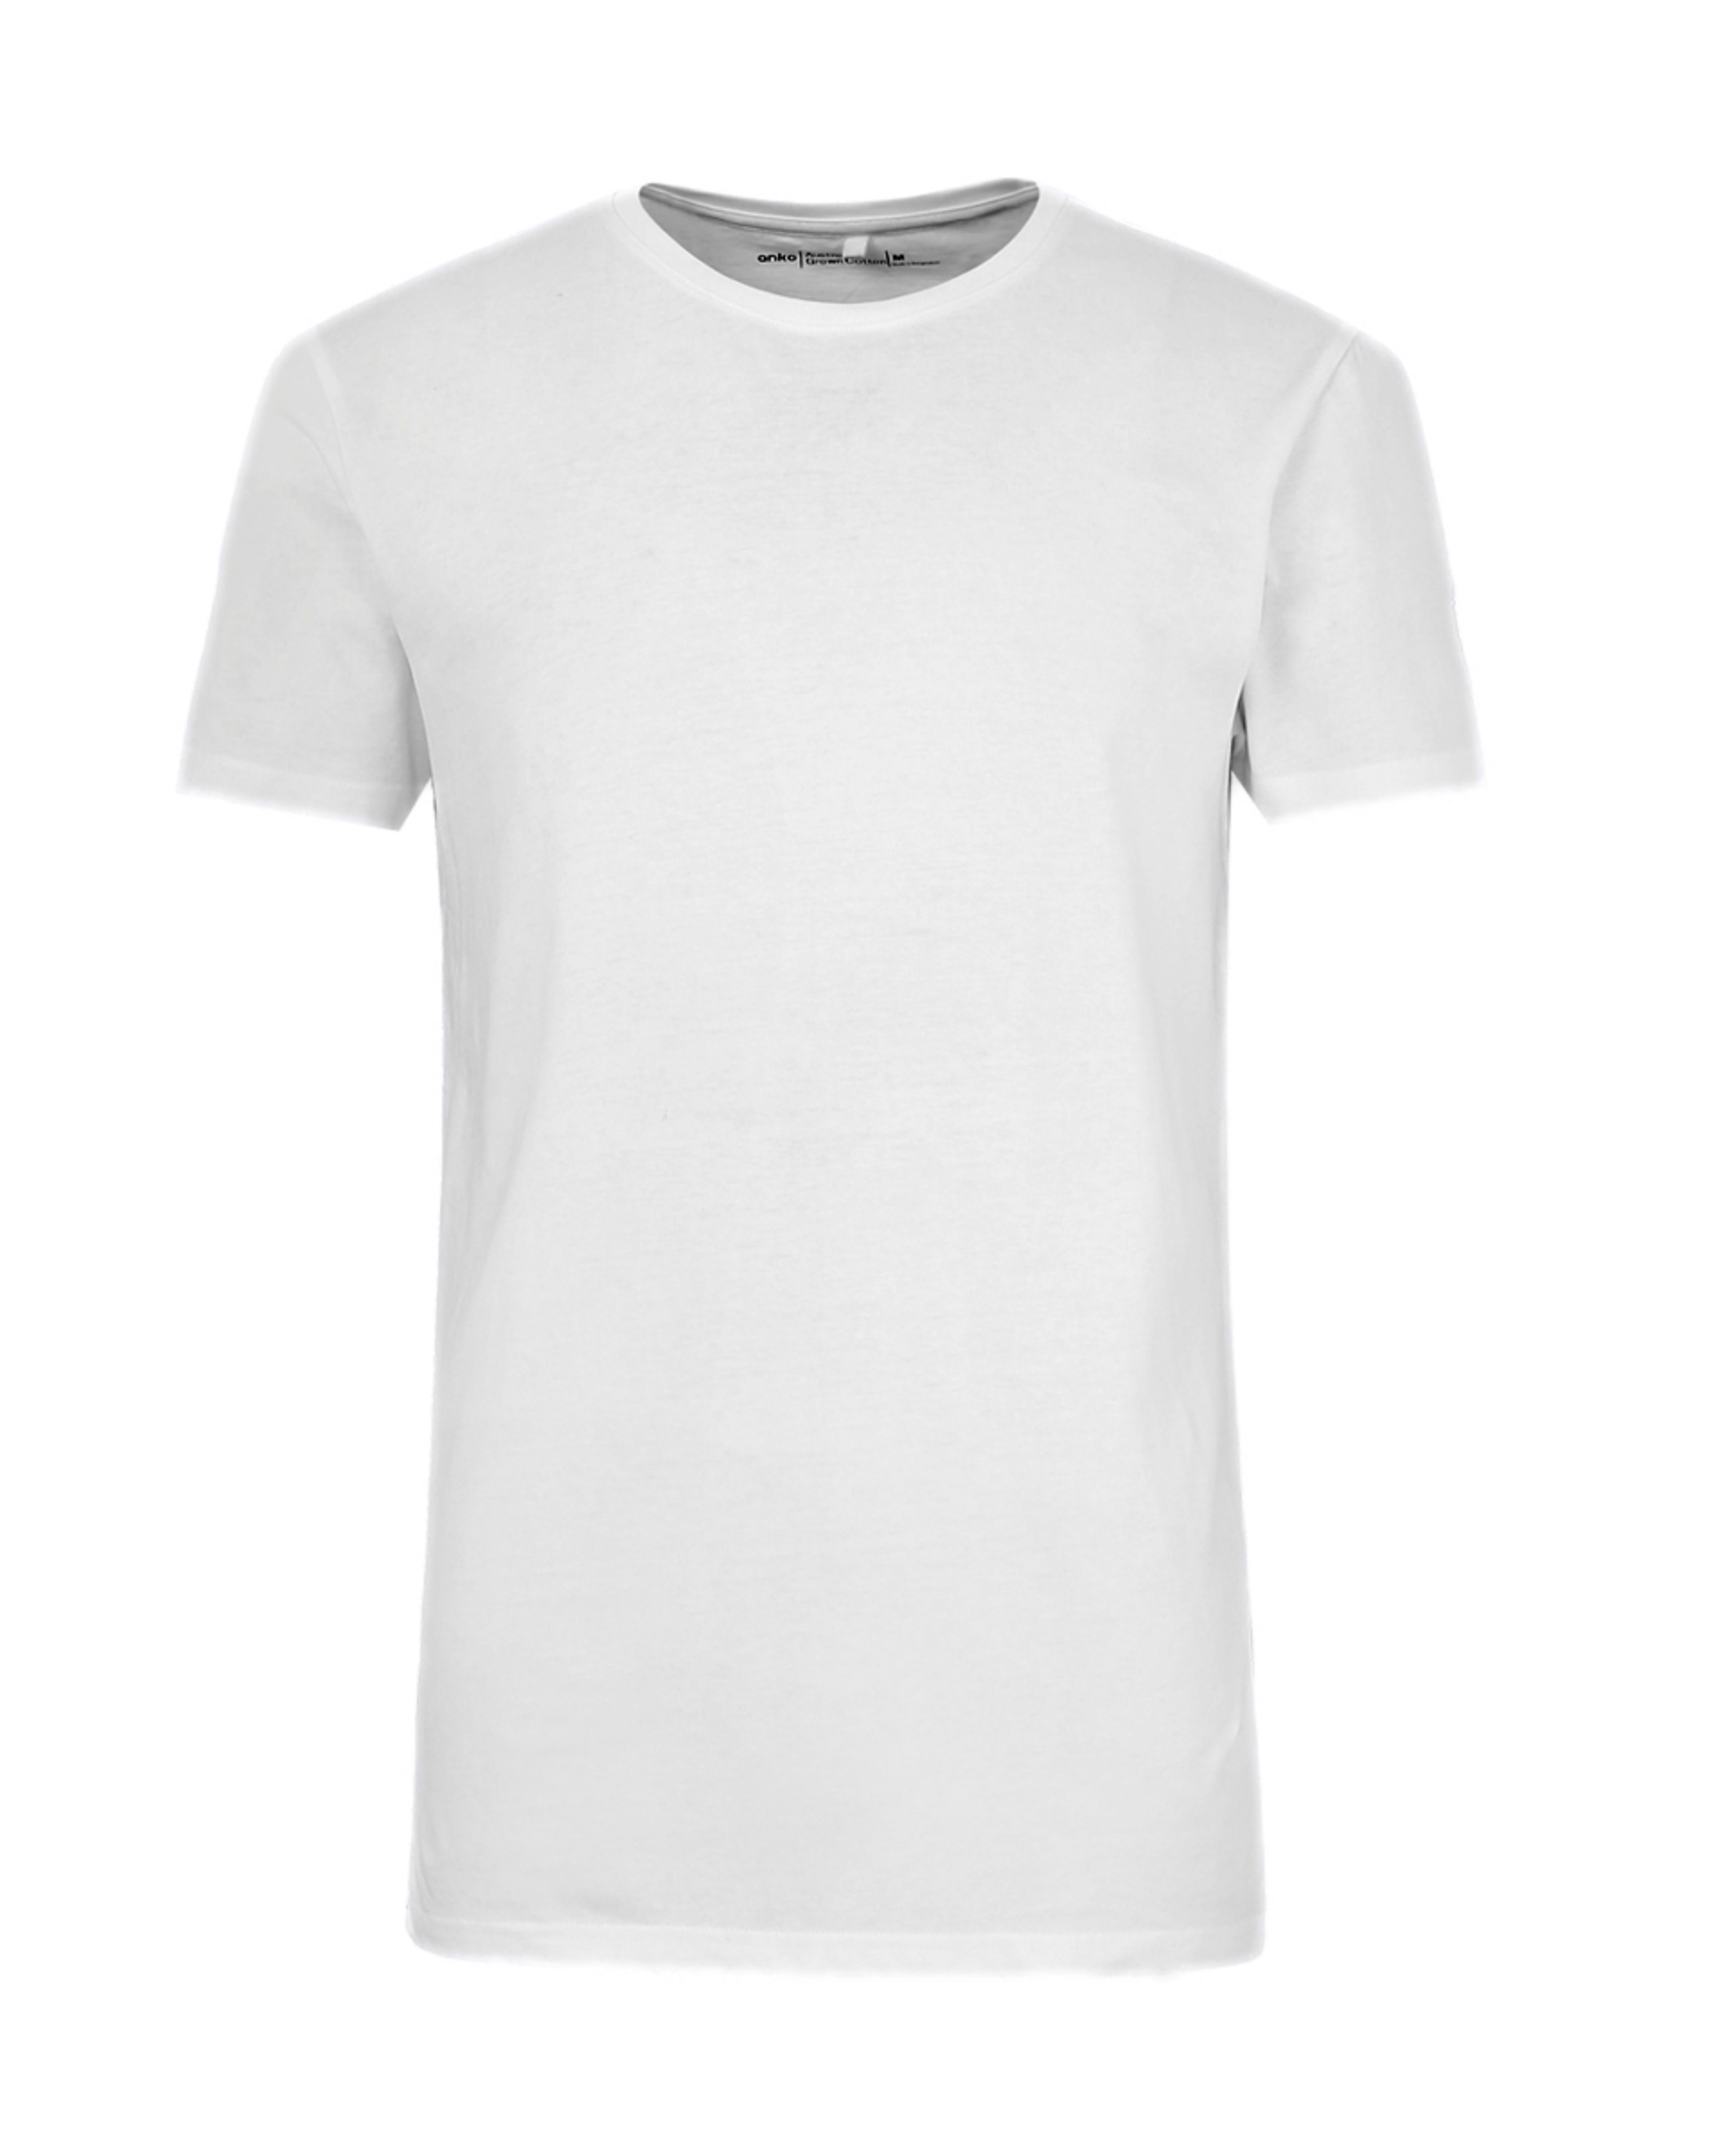 Australian Grown Cotton Longline T-shirt - Kmart